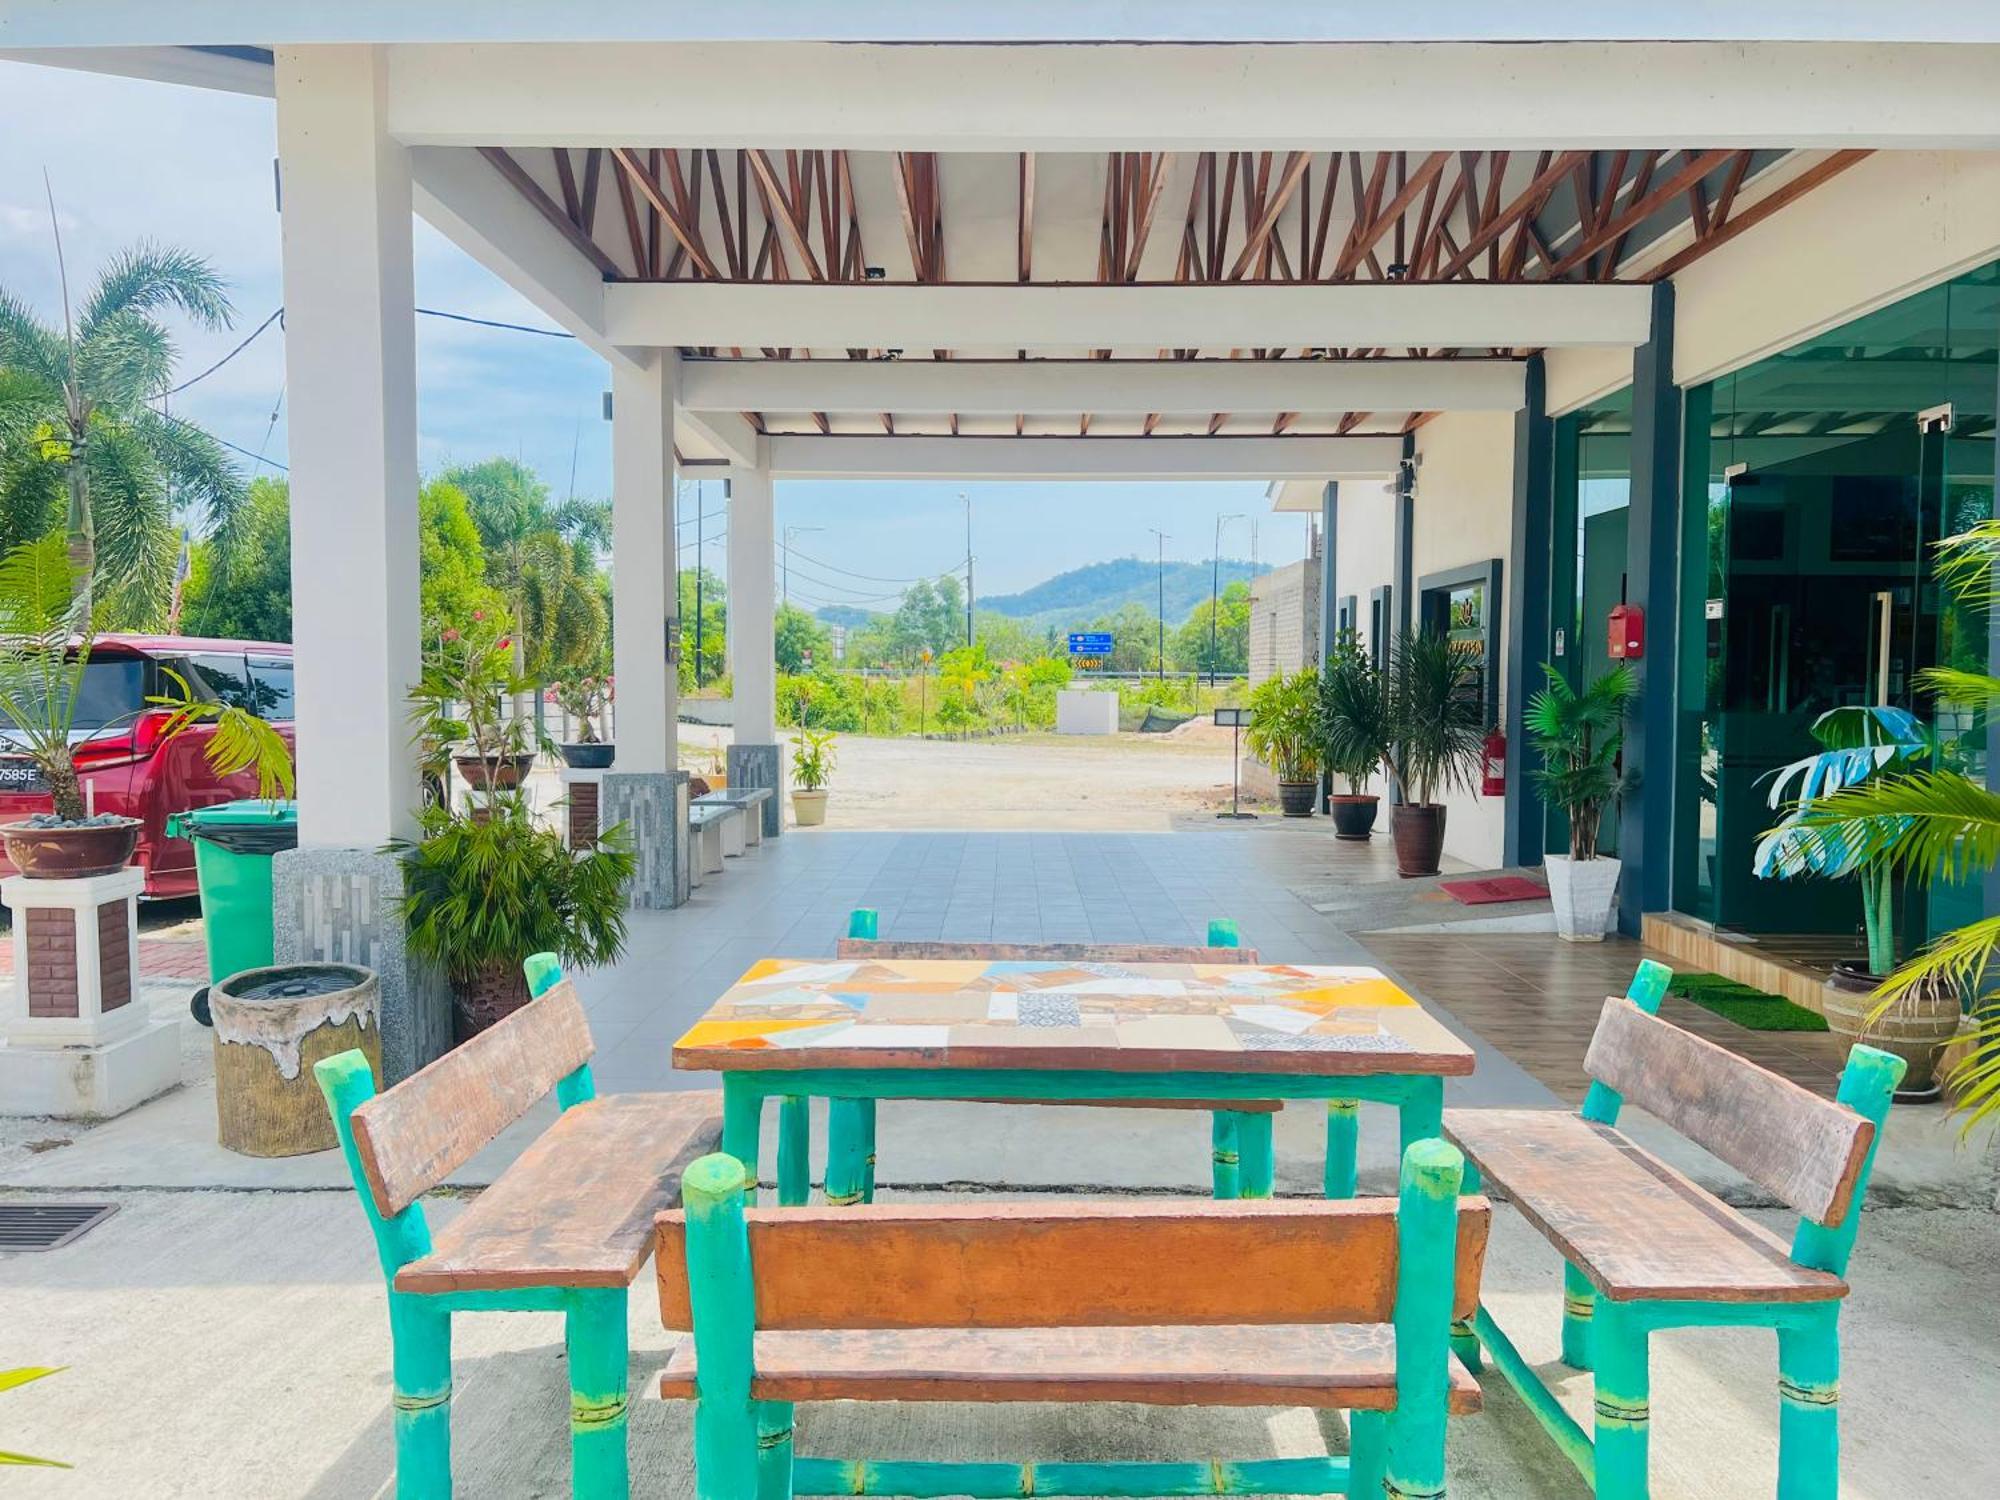 Sri Embun Resort Langkawi Pantai Cenang  Exterior photo